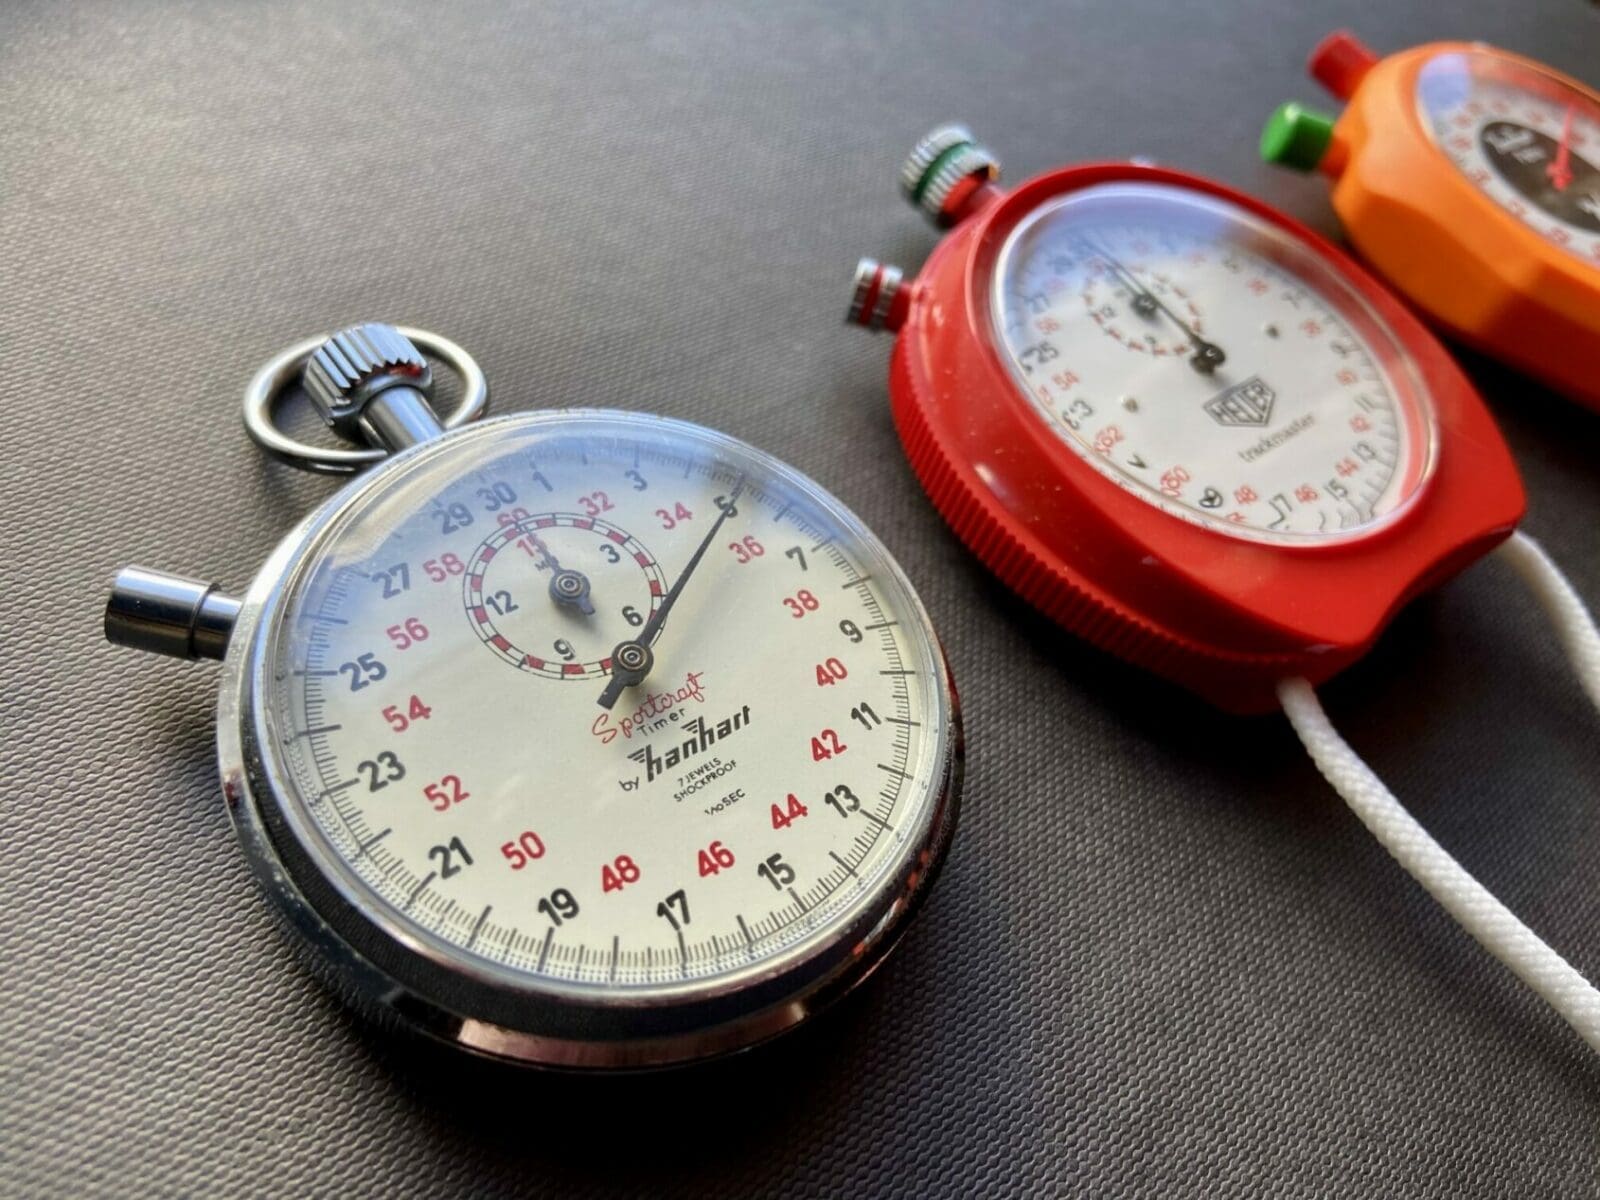 bargain treasures in vintage stopwatches